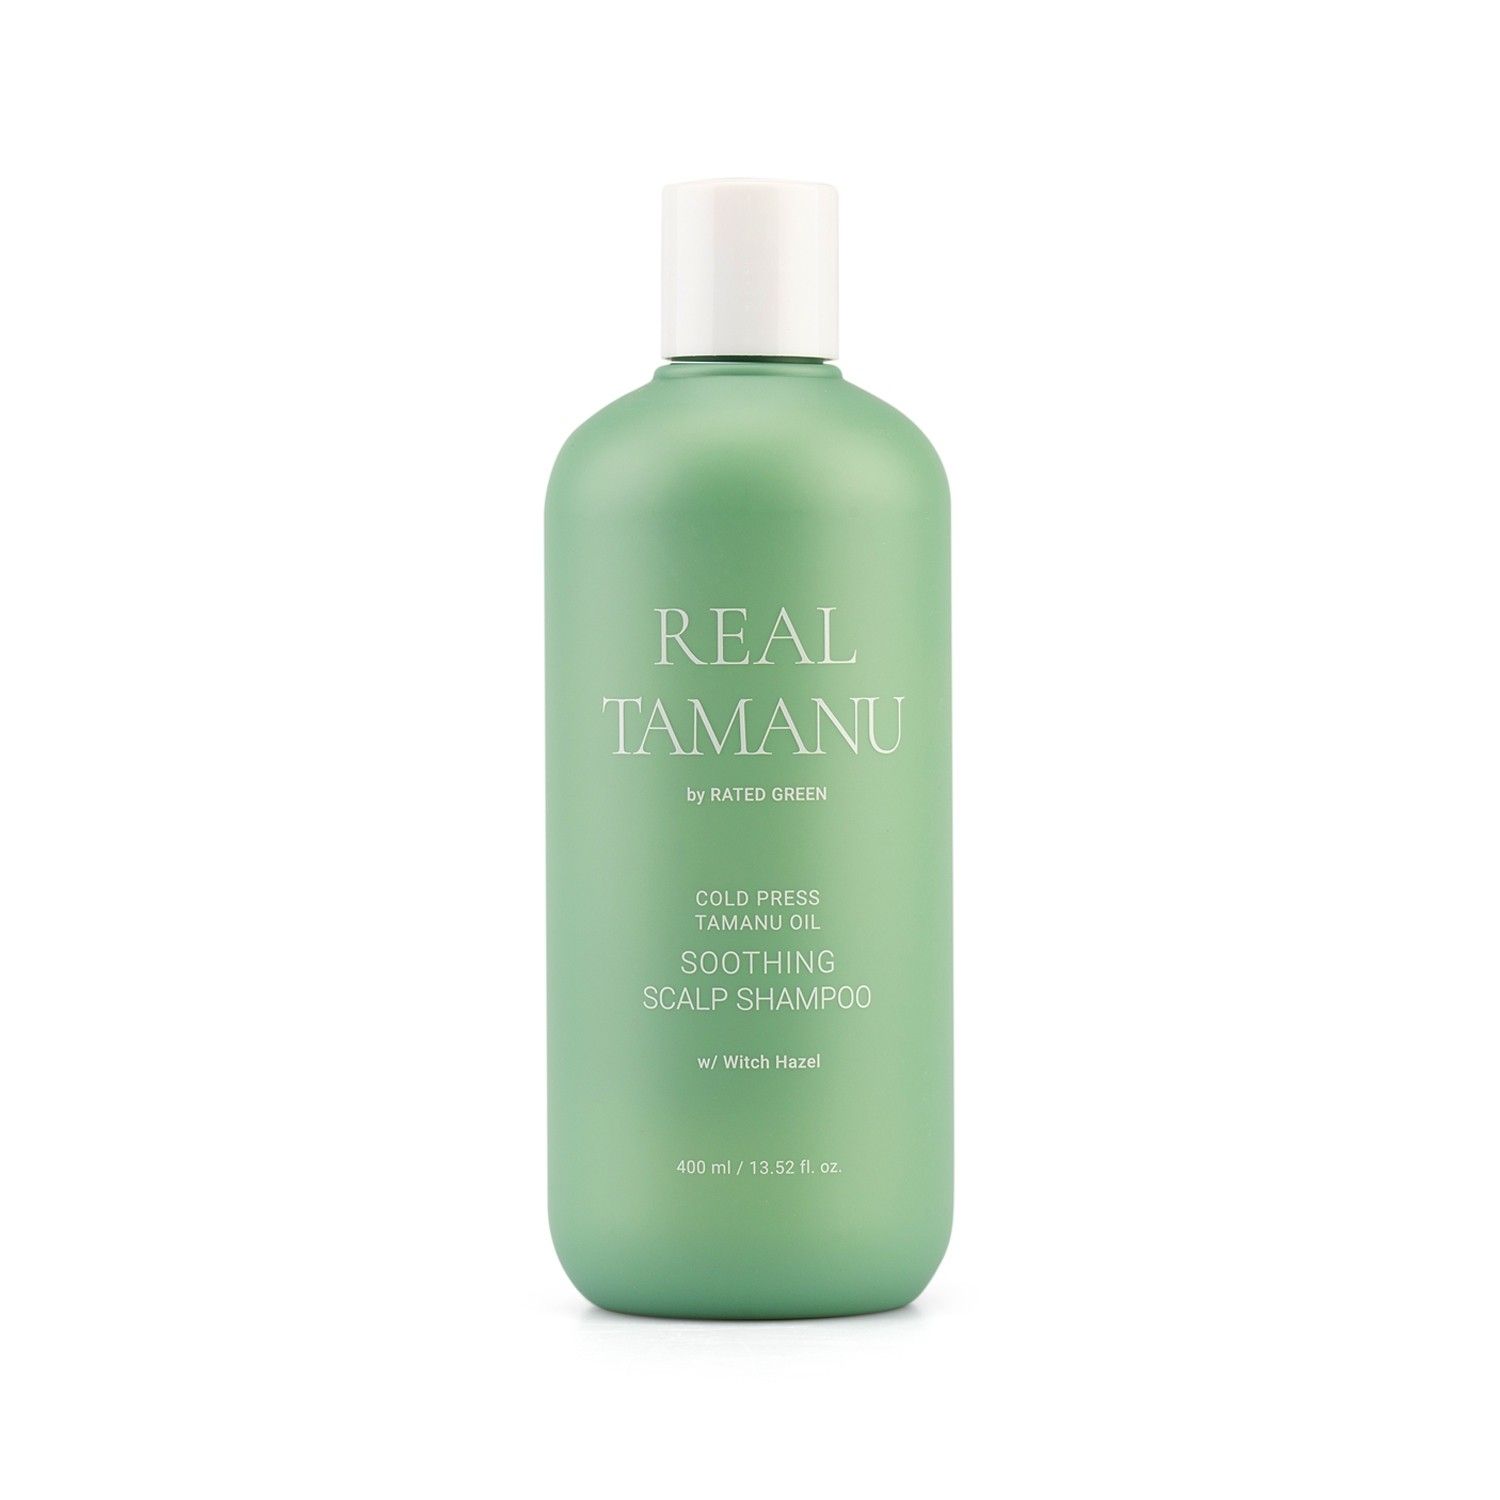 Rated Green Cold Pressed Tamanu Oil Soothing Scalp Shampoo 400ml - интернет-магазин профессиональной косметики Spadream, изображение 41950